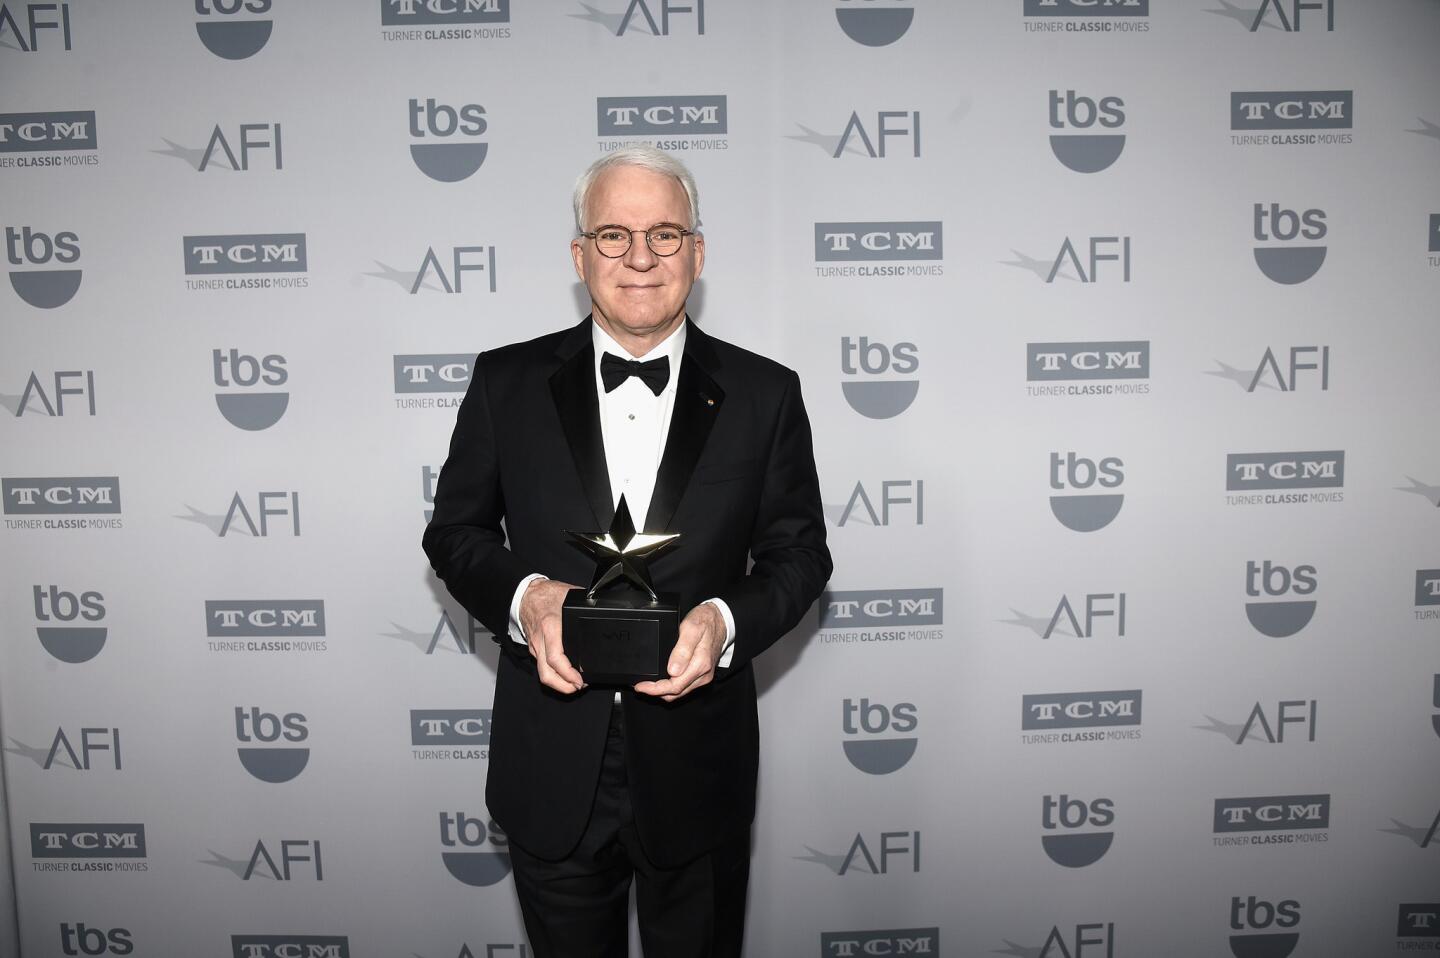 Steve Martin's AFI Life Achievement Award ceremony